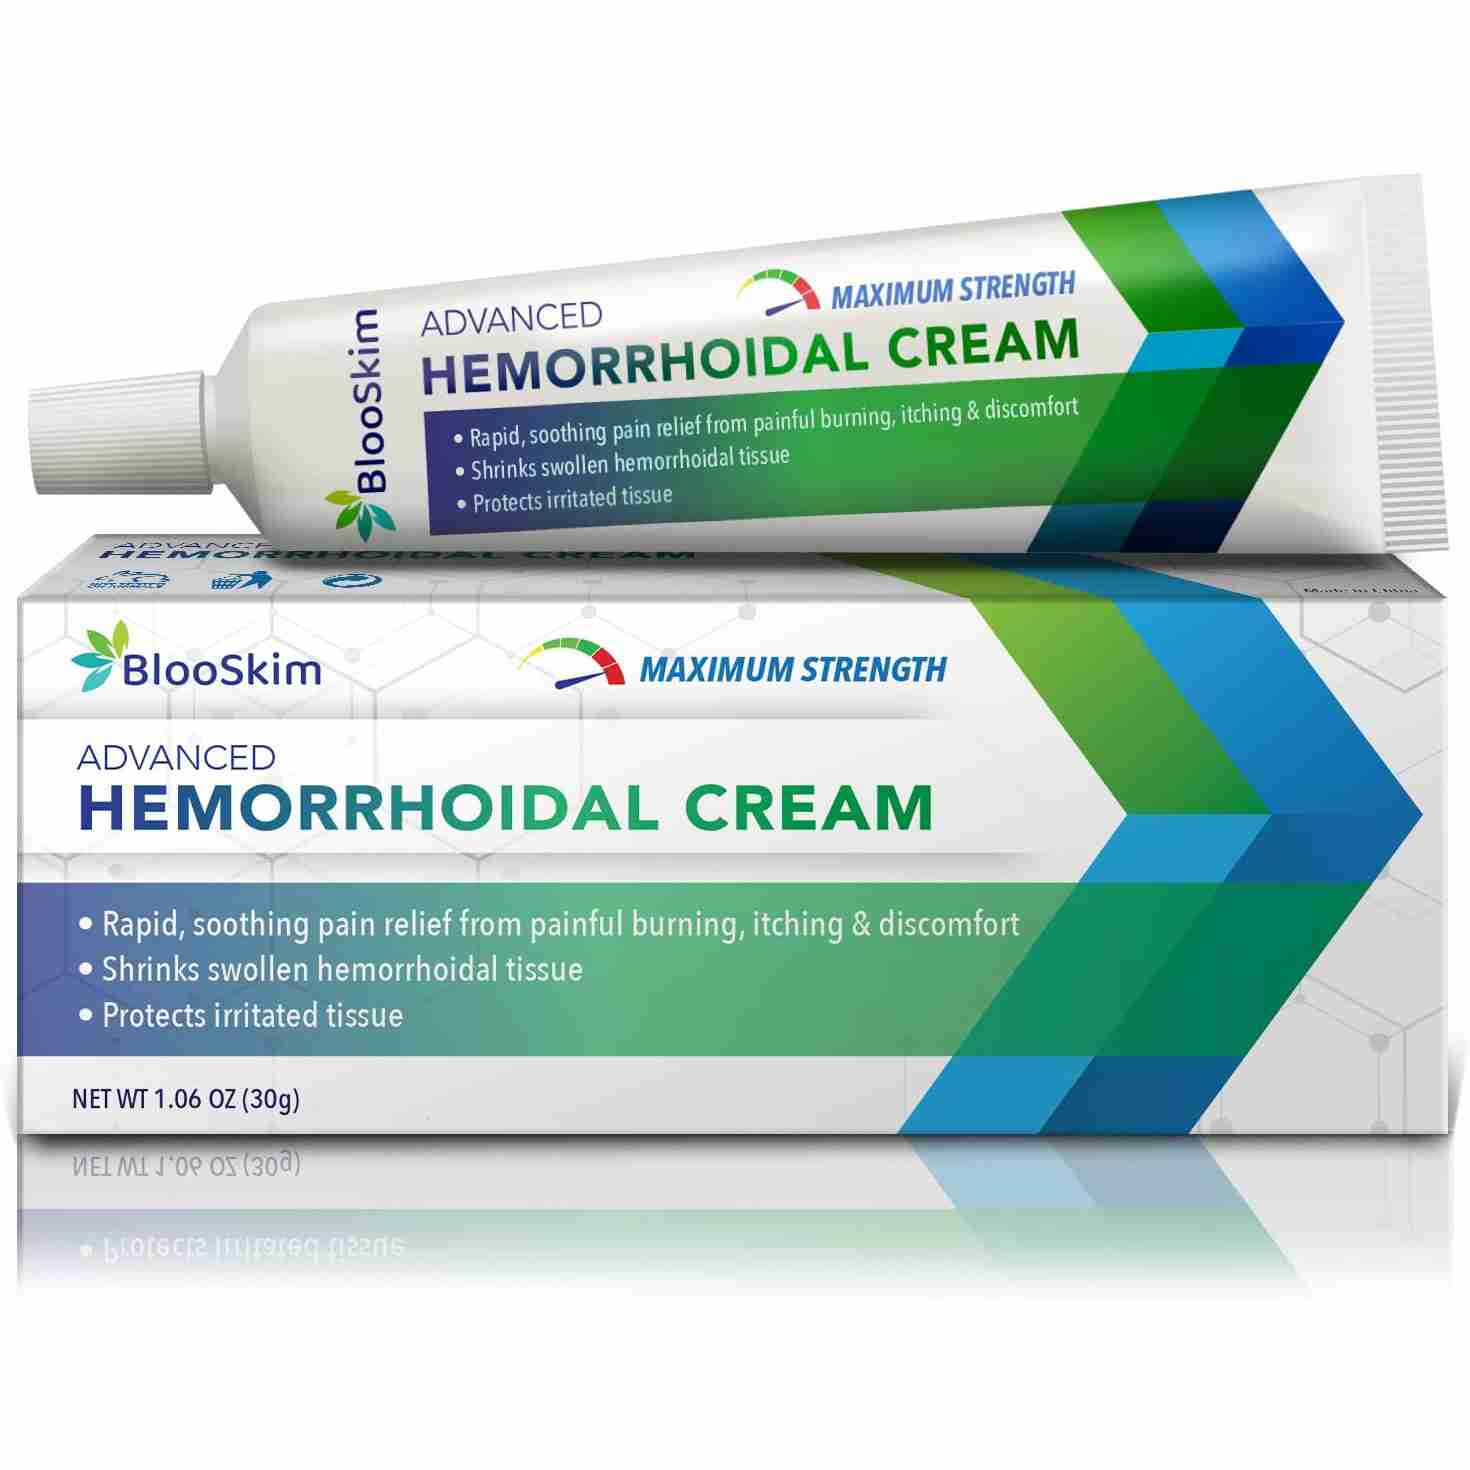 hemorrhoid-cream with cash back rebate